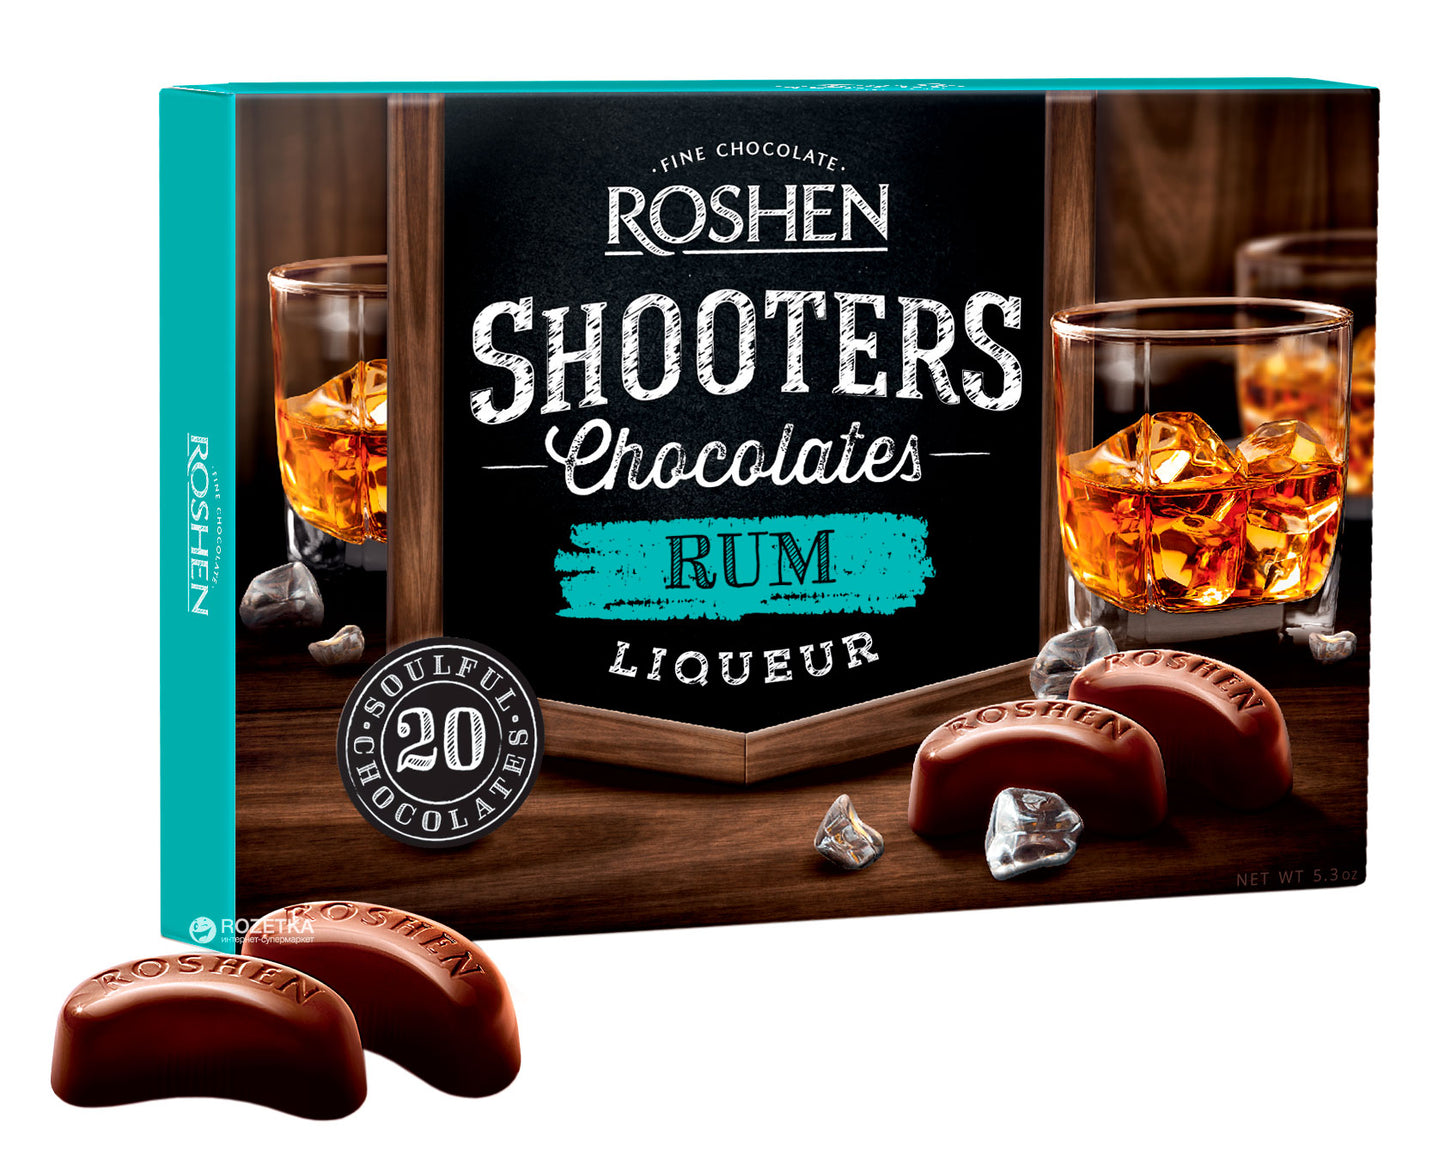 Roshen Shooters rom liquer 150g